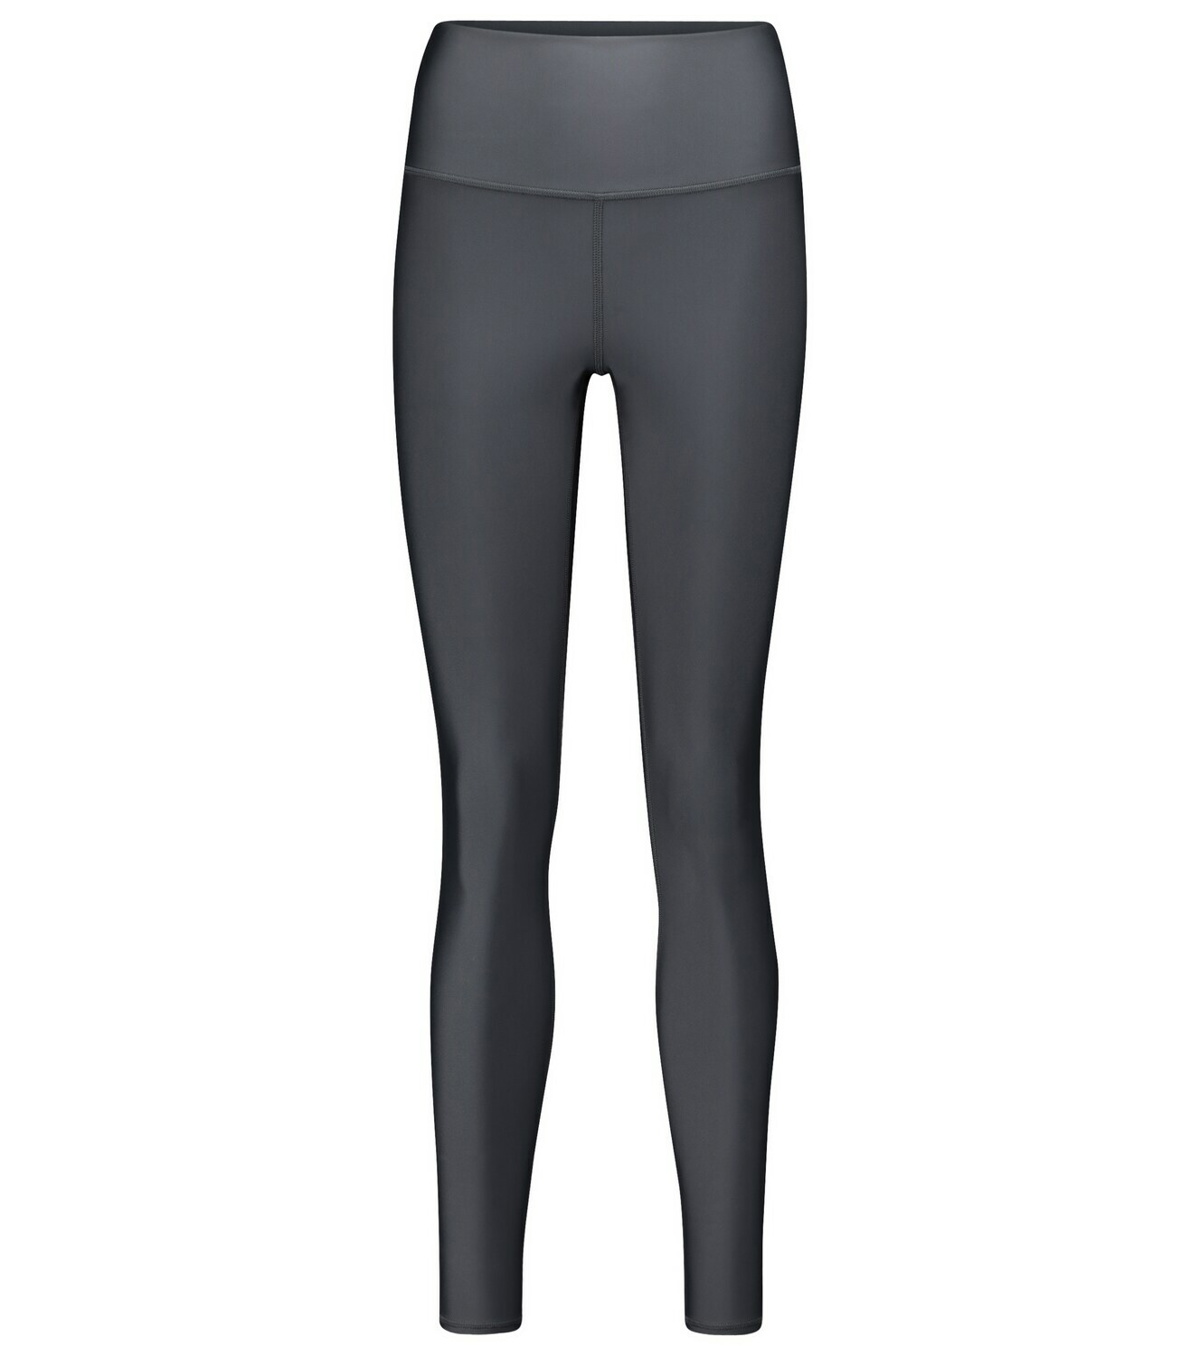 Alosoft high-rise jersey leggings in black - Alo Yoga